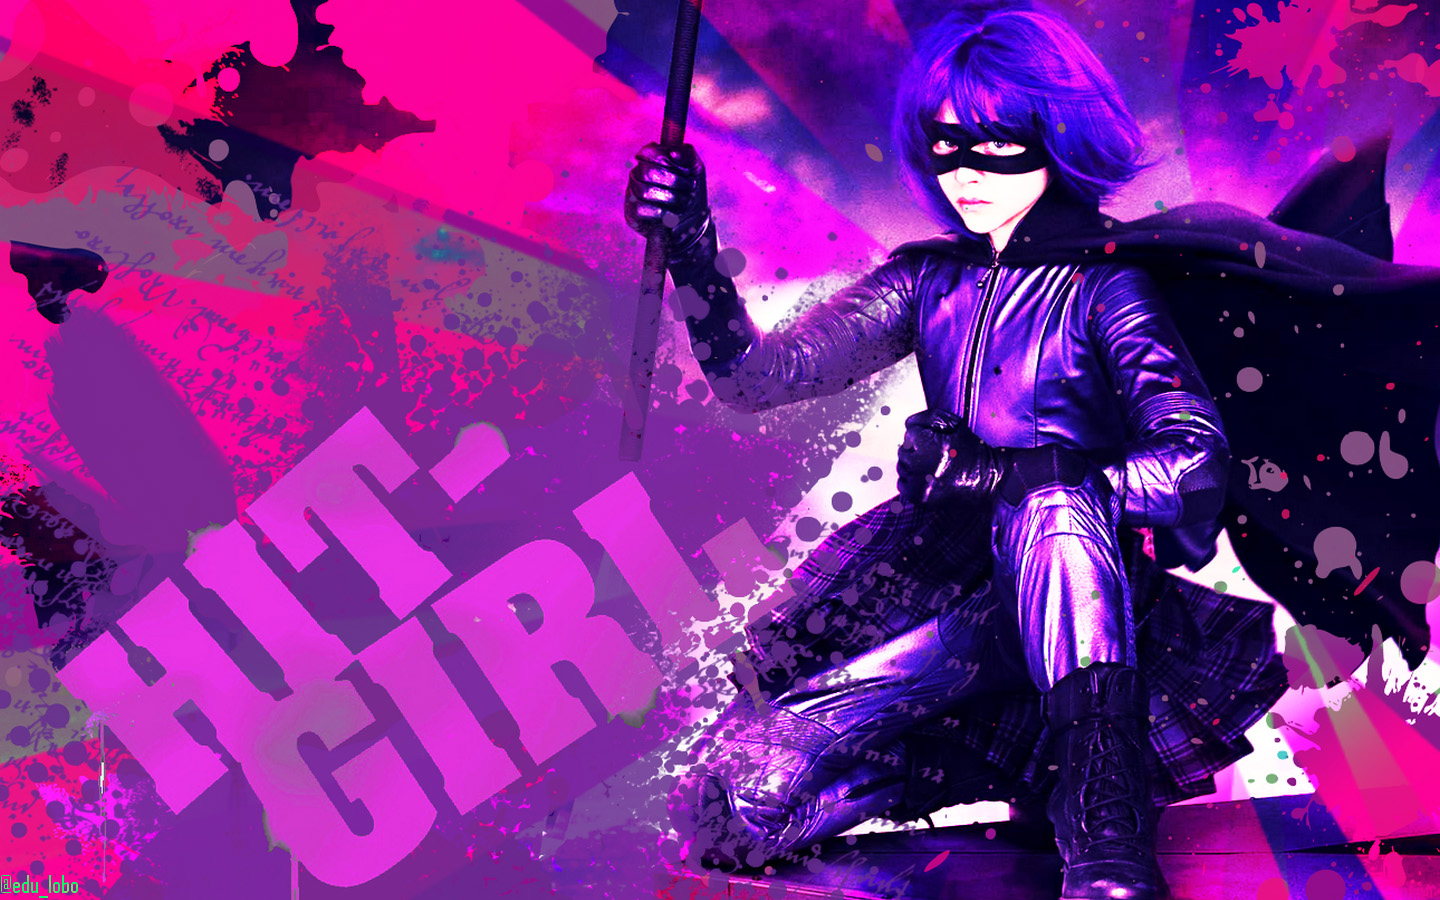 hit wallpaper hd,purple,violet,graphic design,fictional character,cg artwork